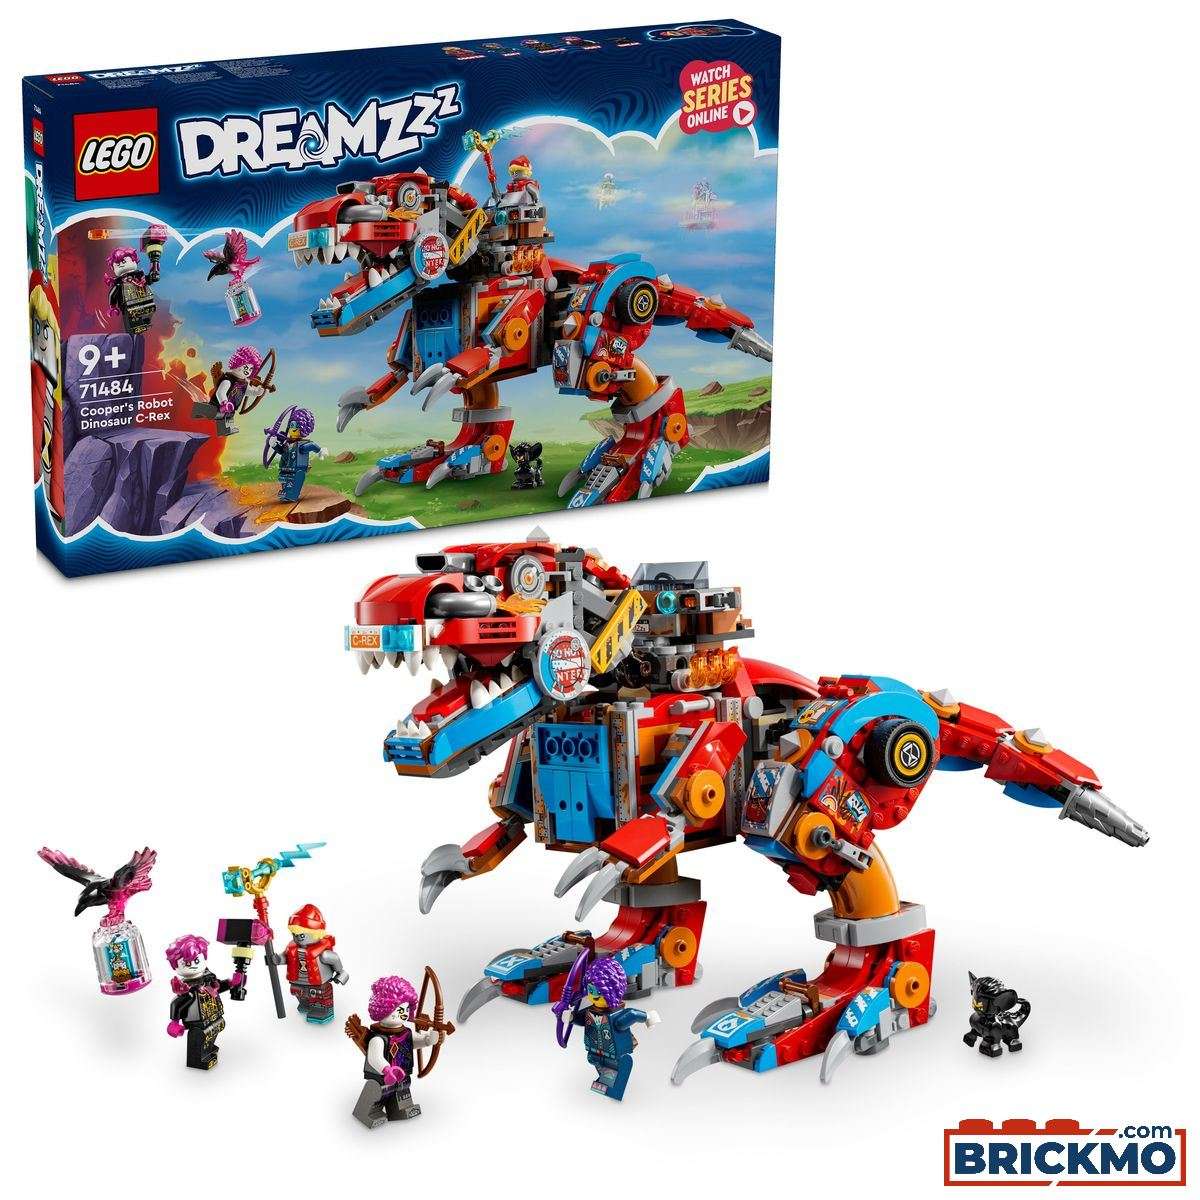 LEGO DreamZzz 71484 Coopers robotdinosaur C-Rex 71484